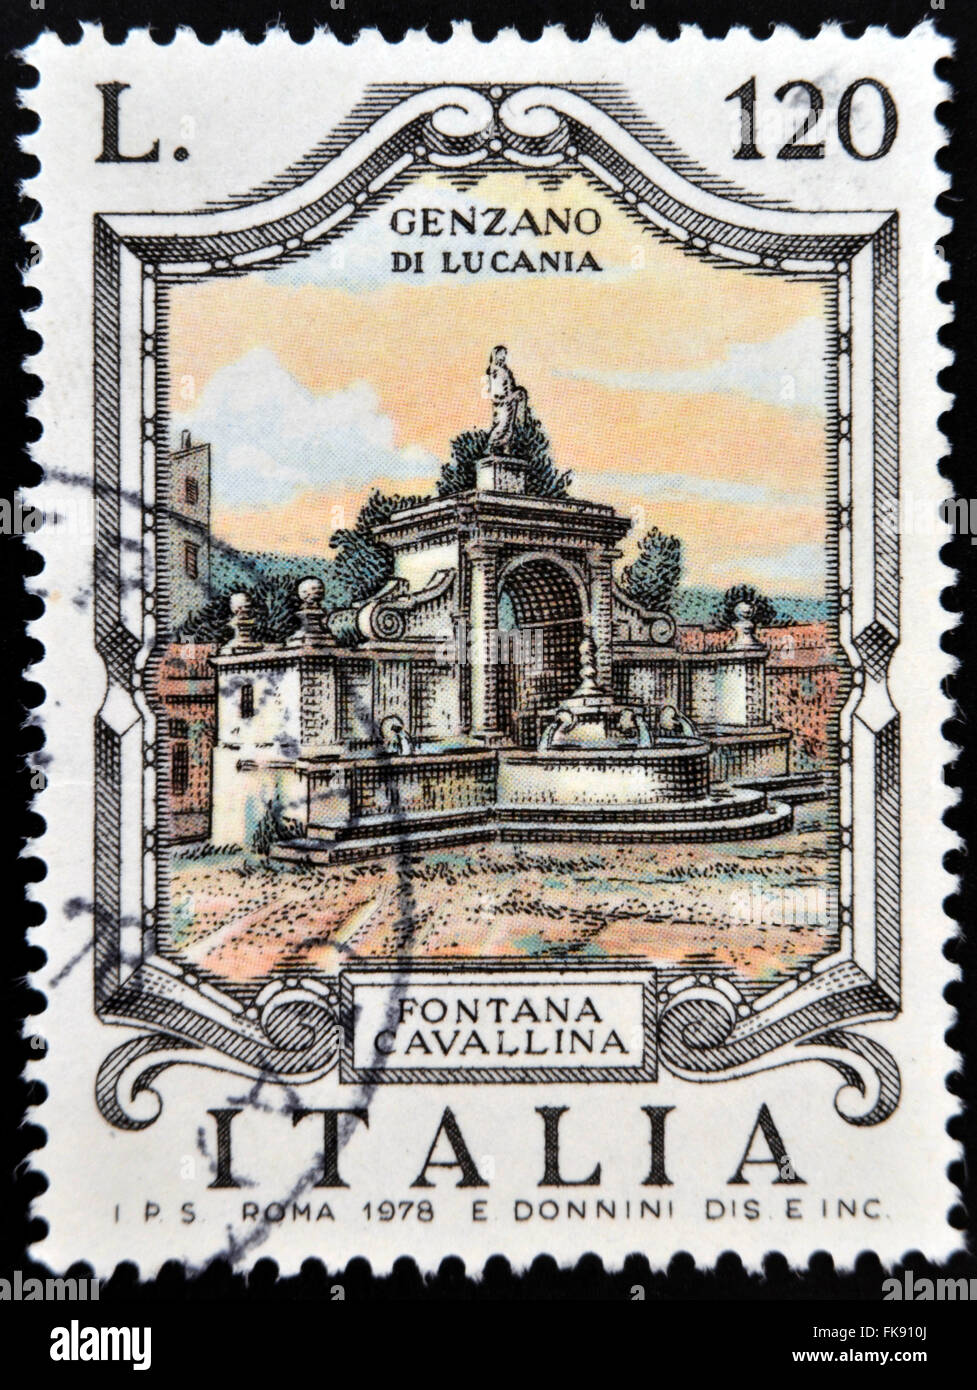 ITALY - CIRCA 1978: a stamp printed in Italy shows Cavallina Fountain, Genzano di Lucania, circa 1978 Stock Photo